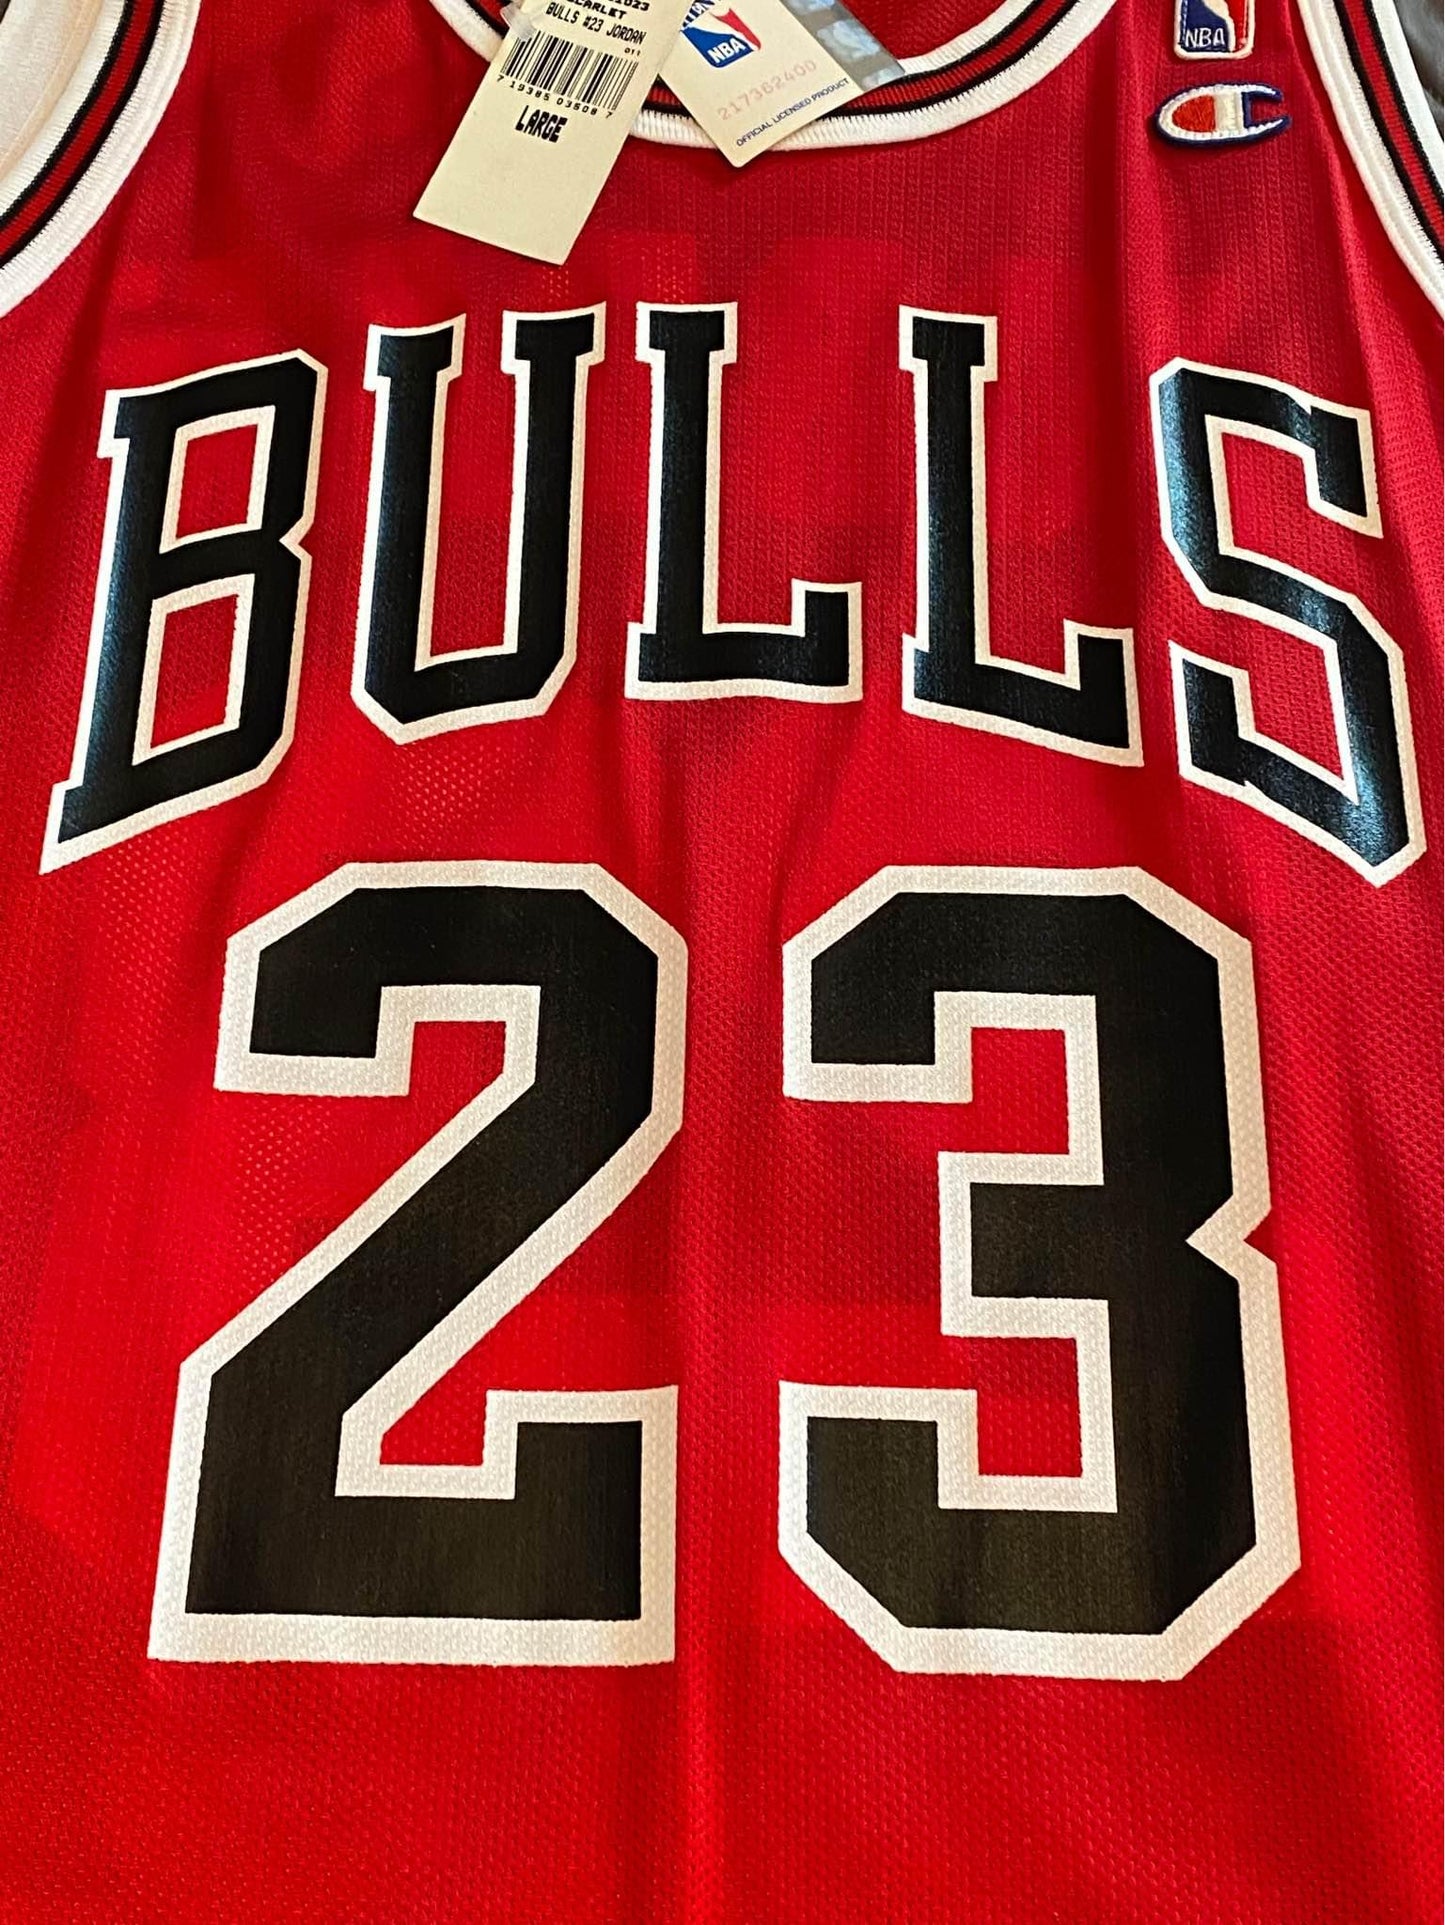 Vintage NBA Chicago Bulls Champion Michael Jordan Jersey